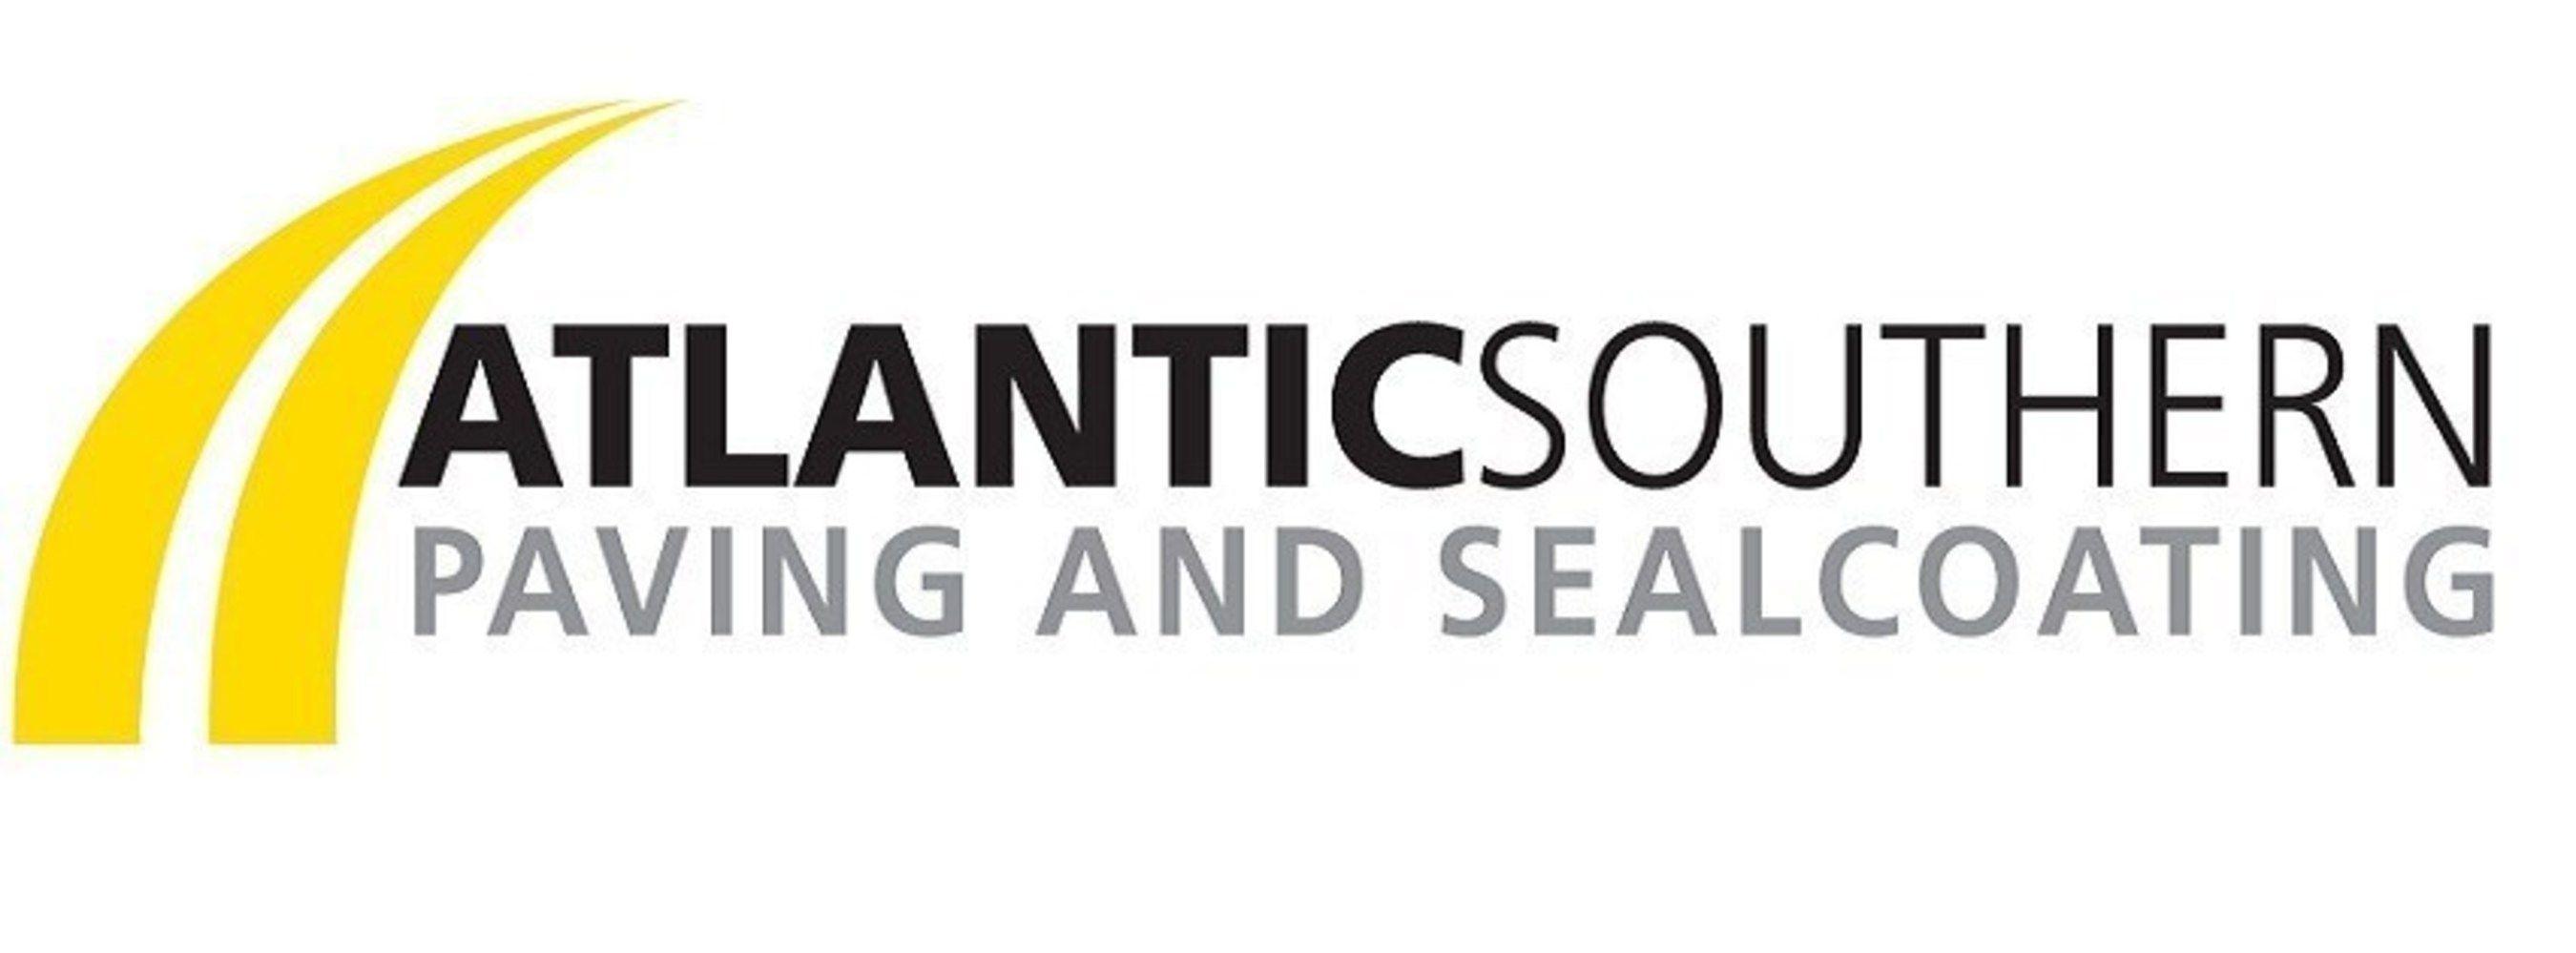 Sealcoating Logo - Atlantic Southern Paving and Sealcoating Ranked Among 50 Fastest